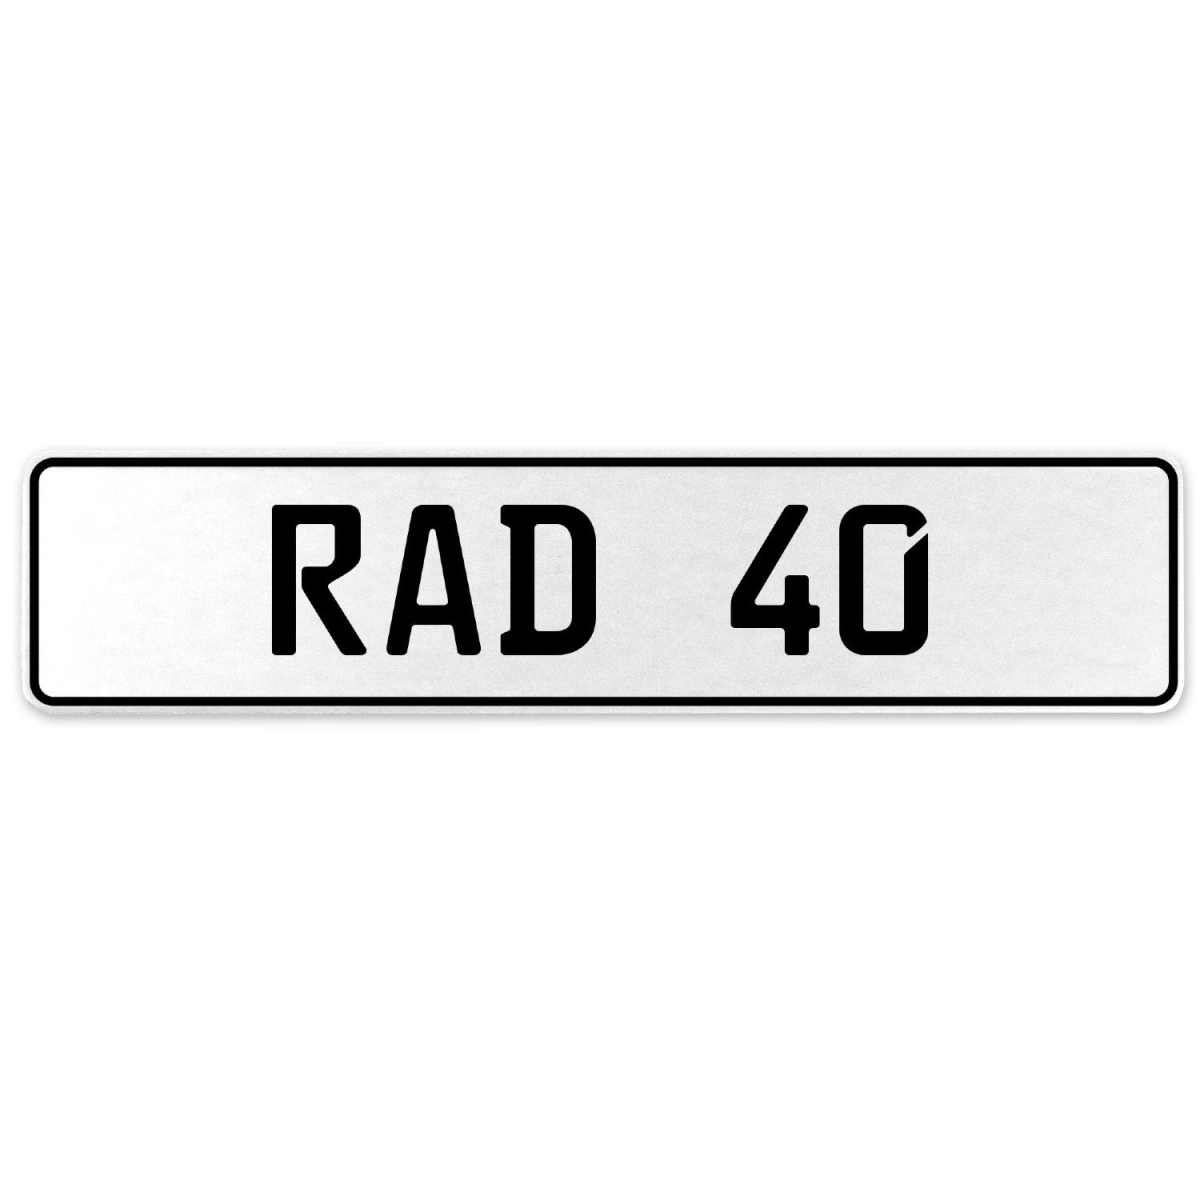 553944 Rad 40 - White Aluminum Street Sign Mancave Euro Plate Name Door Sign Wall Art